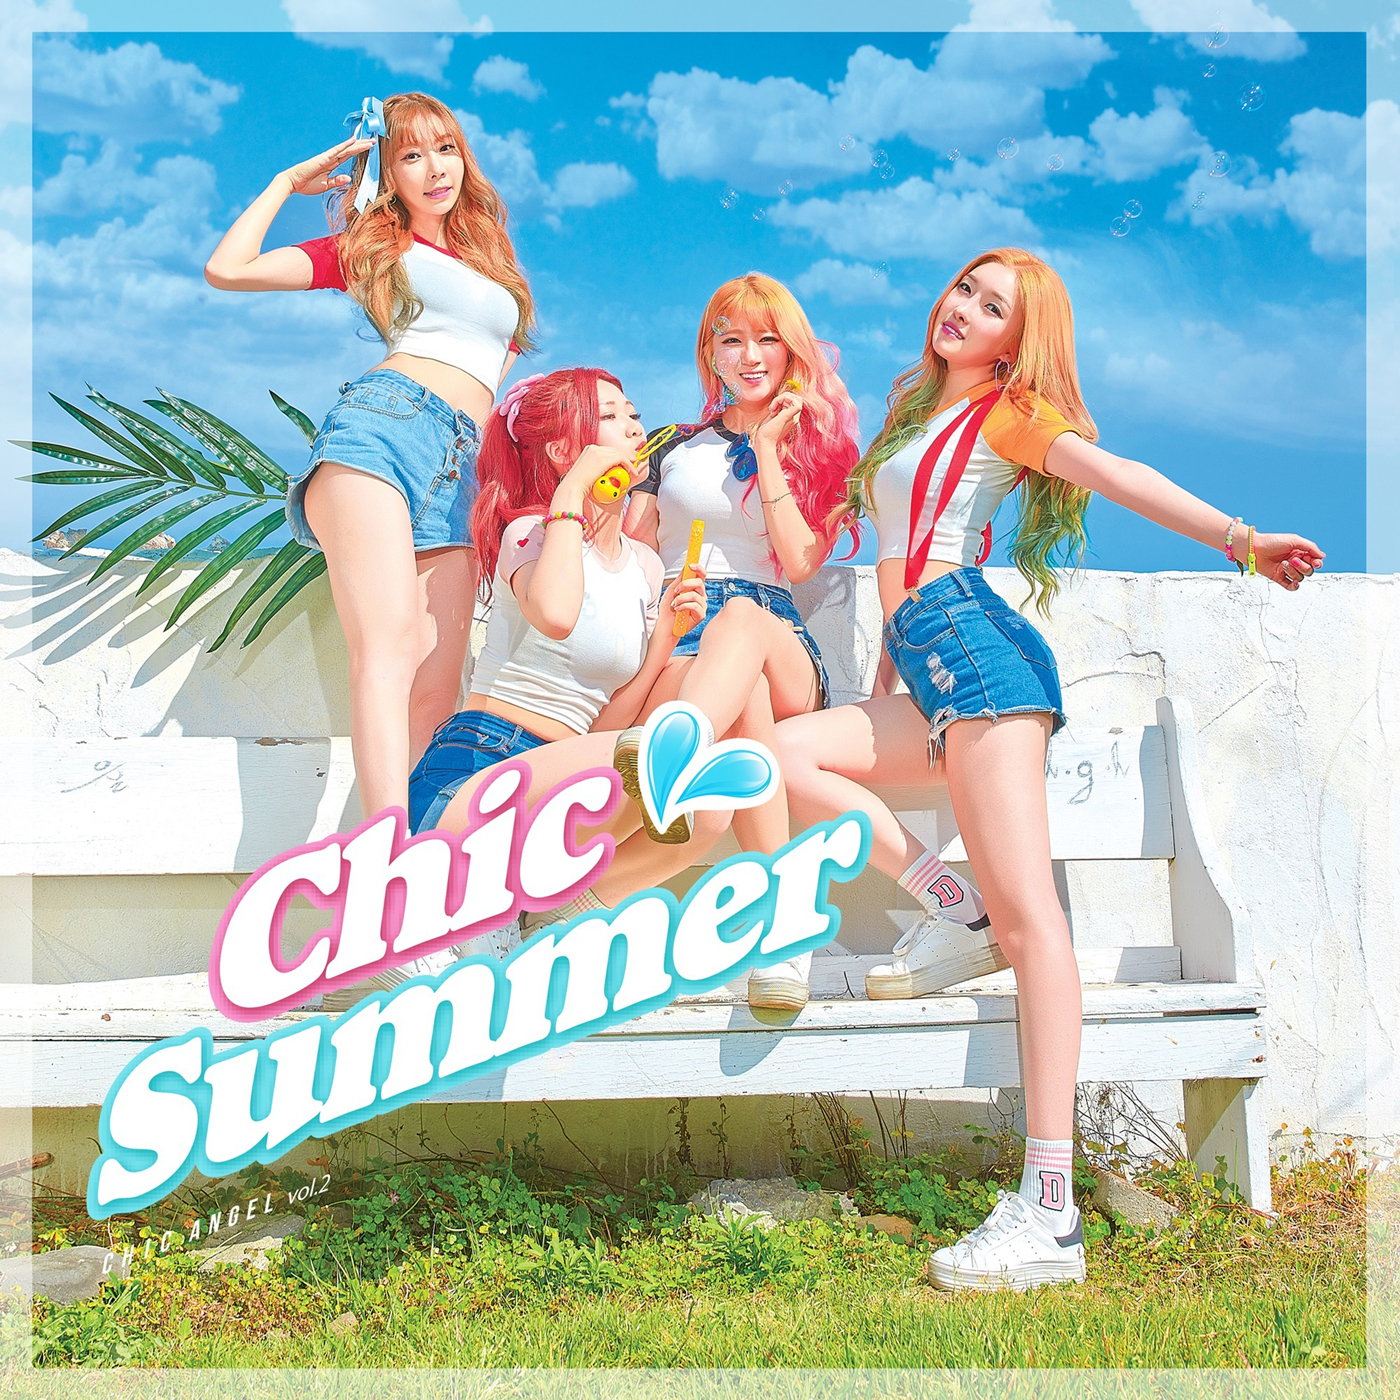 20200108.0418.01 Chicangel - Chic Summer (FLAC) cover.jpg